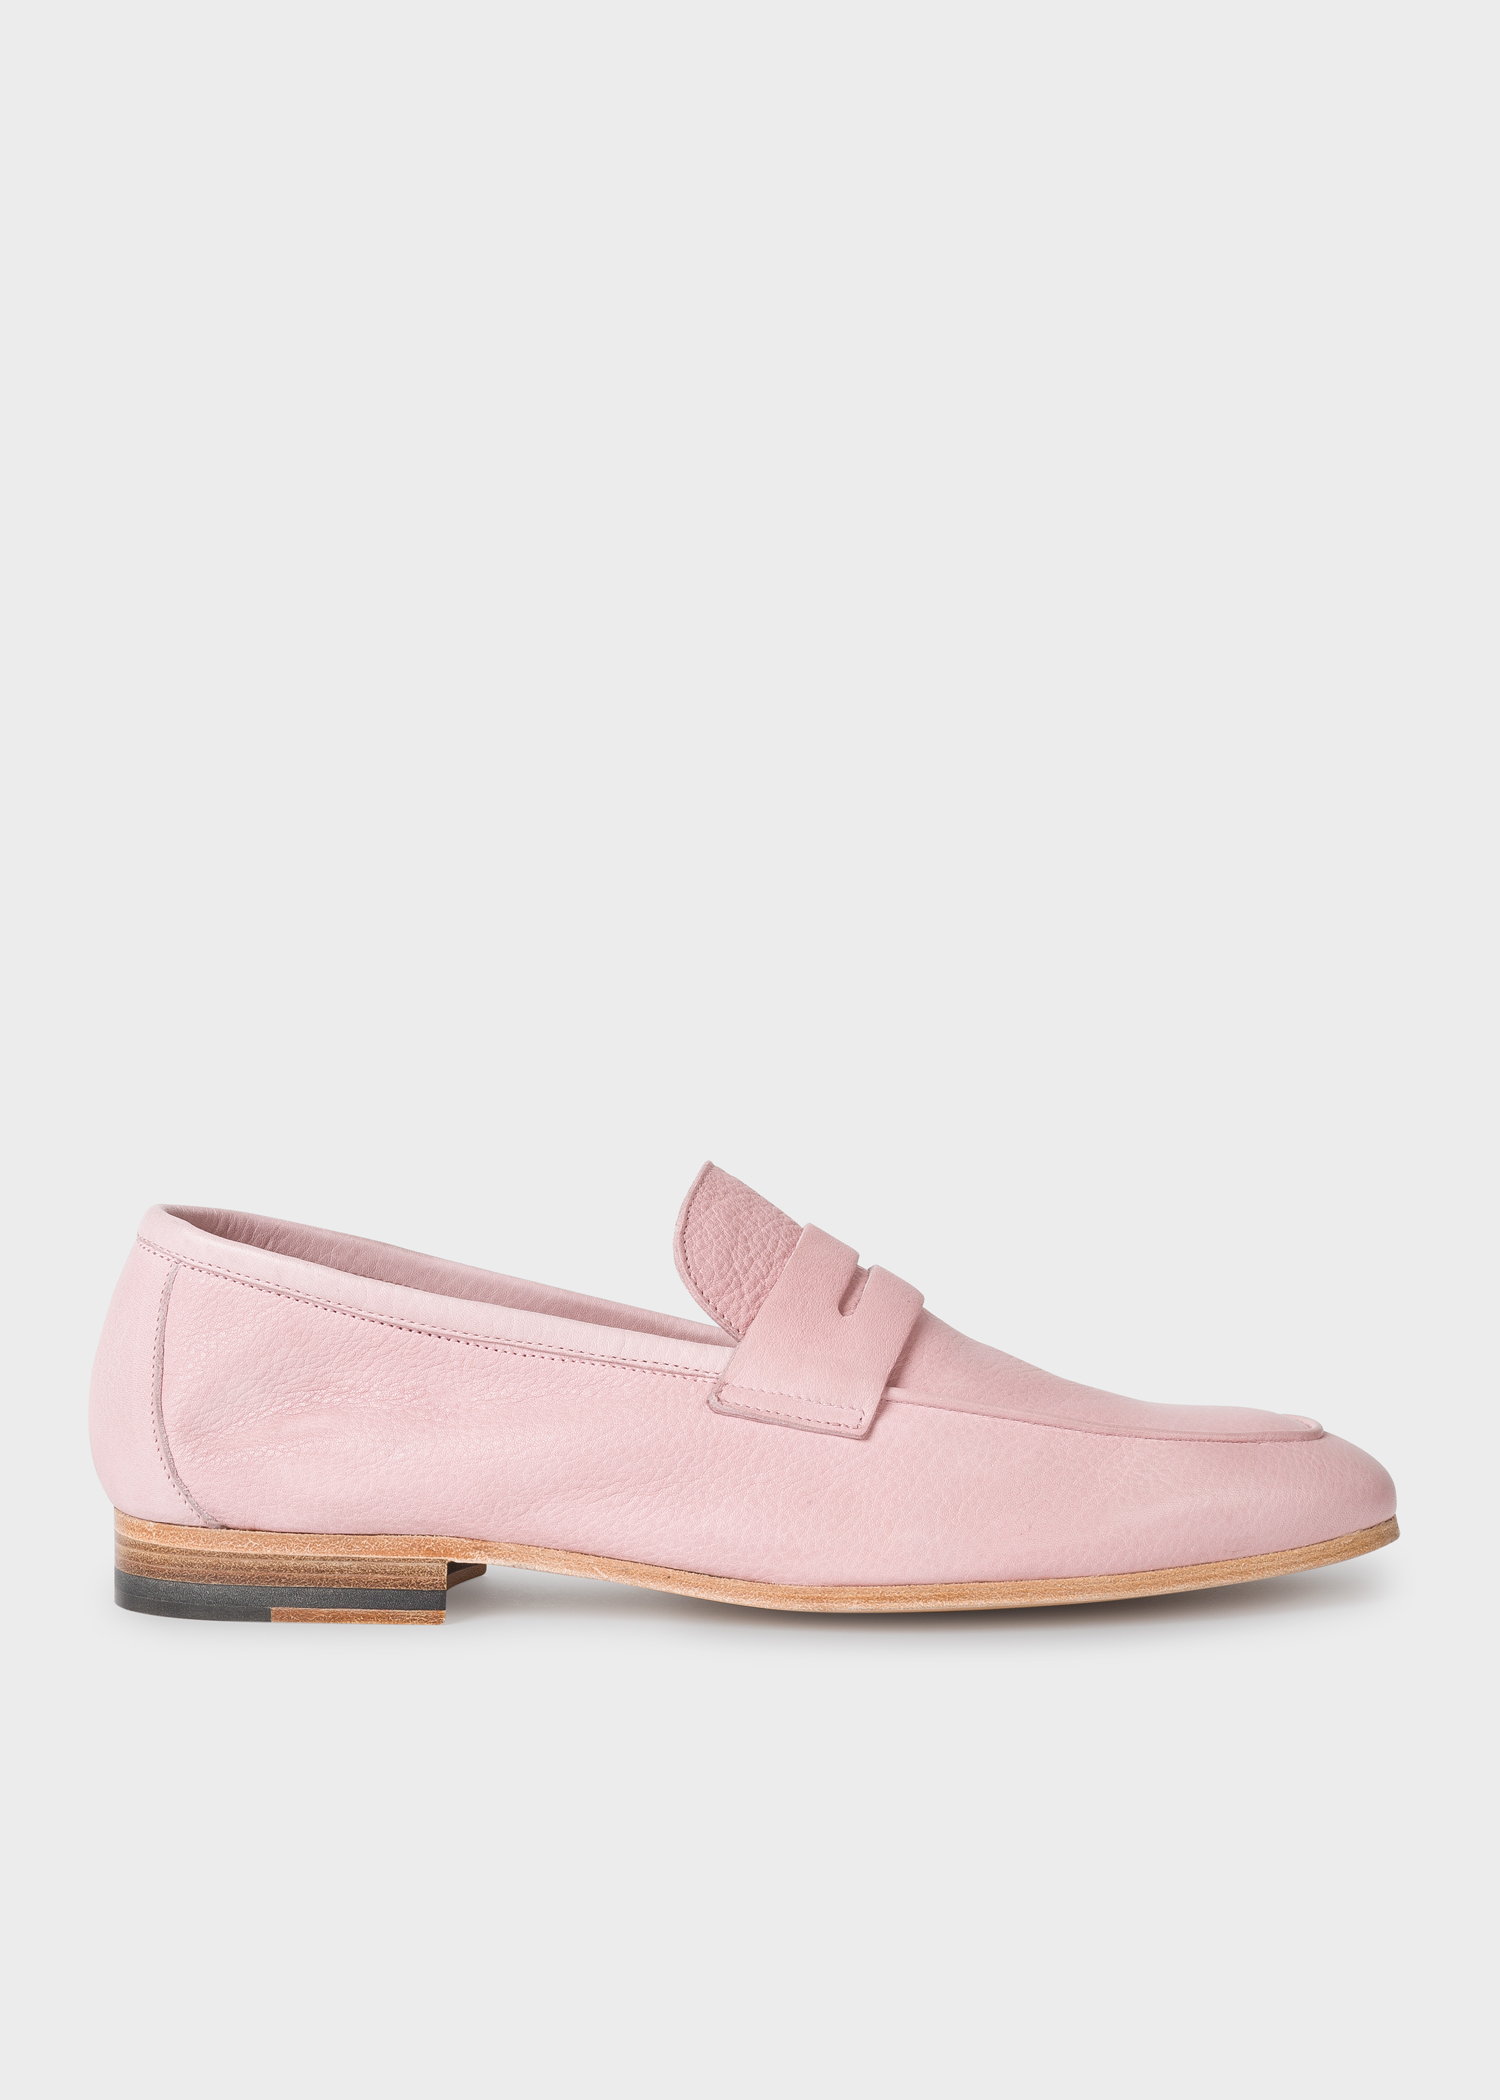 Men's Dusky Pink Leather 'Glynn' Loafers